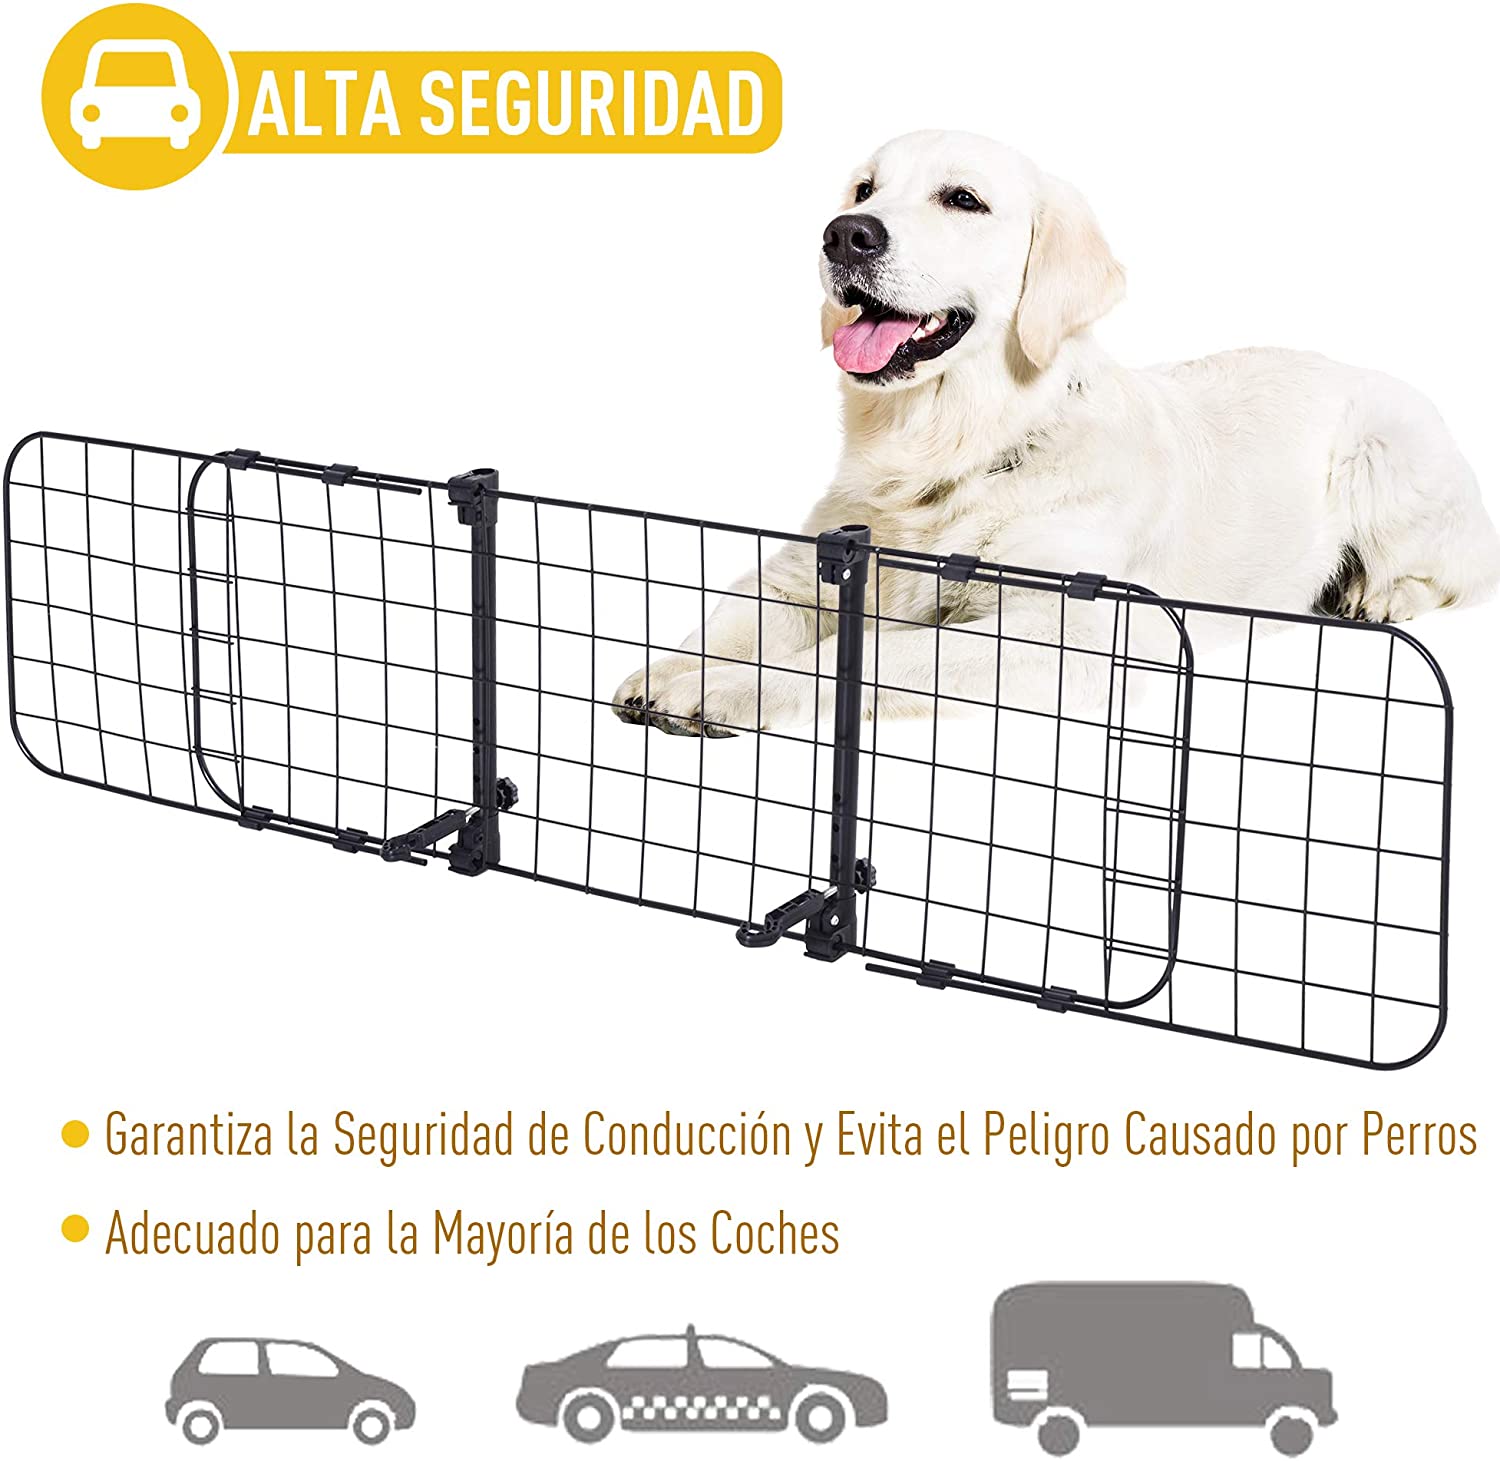  Pawhut Rejilla Separador Perro Coche Extensible Universal Reja de Seguridad Barrera para Perro y Maletas Mascota 91-145x30cm Acero 